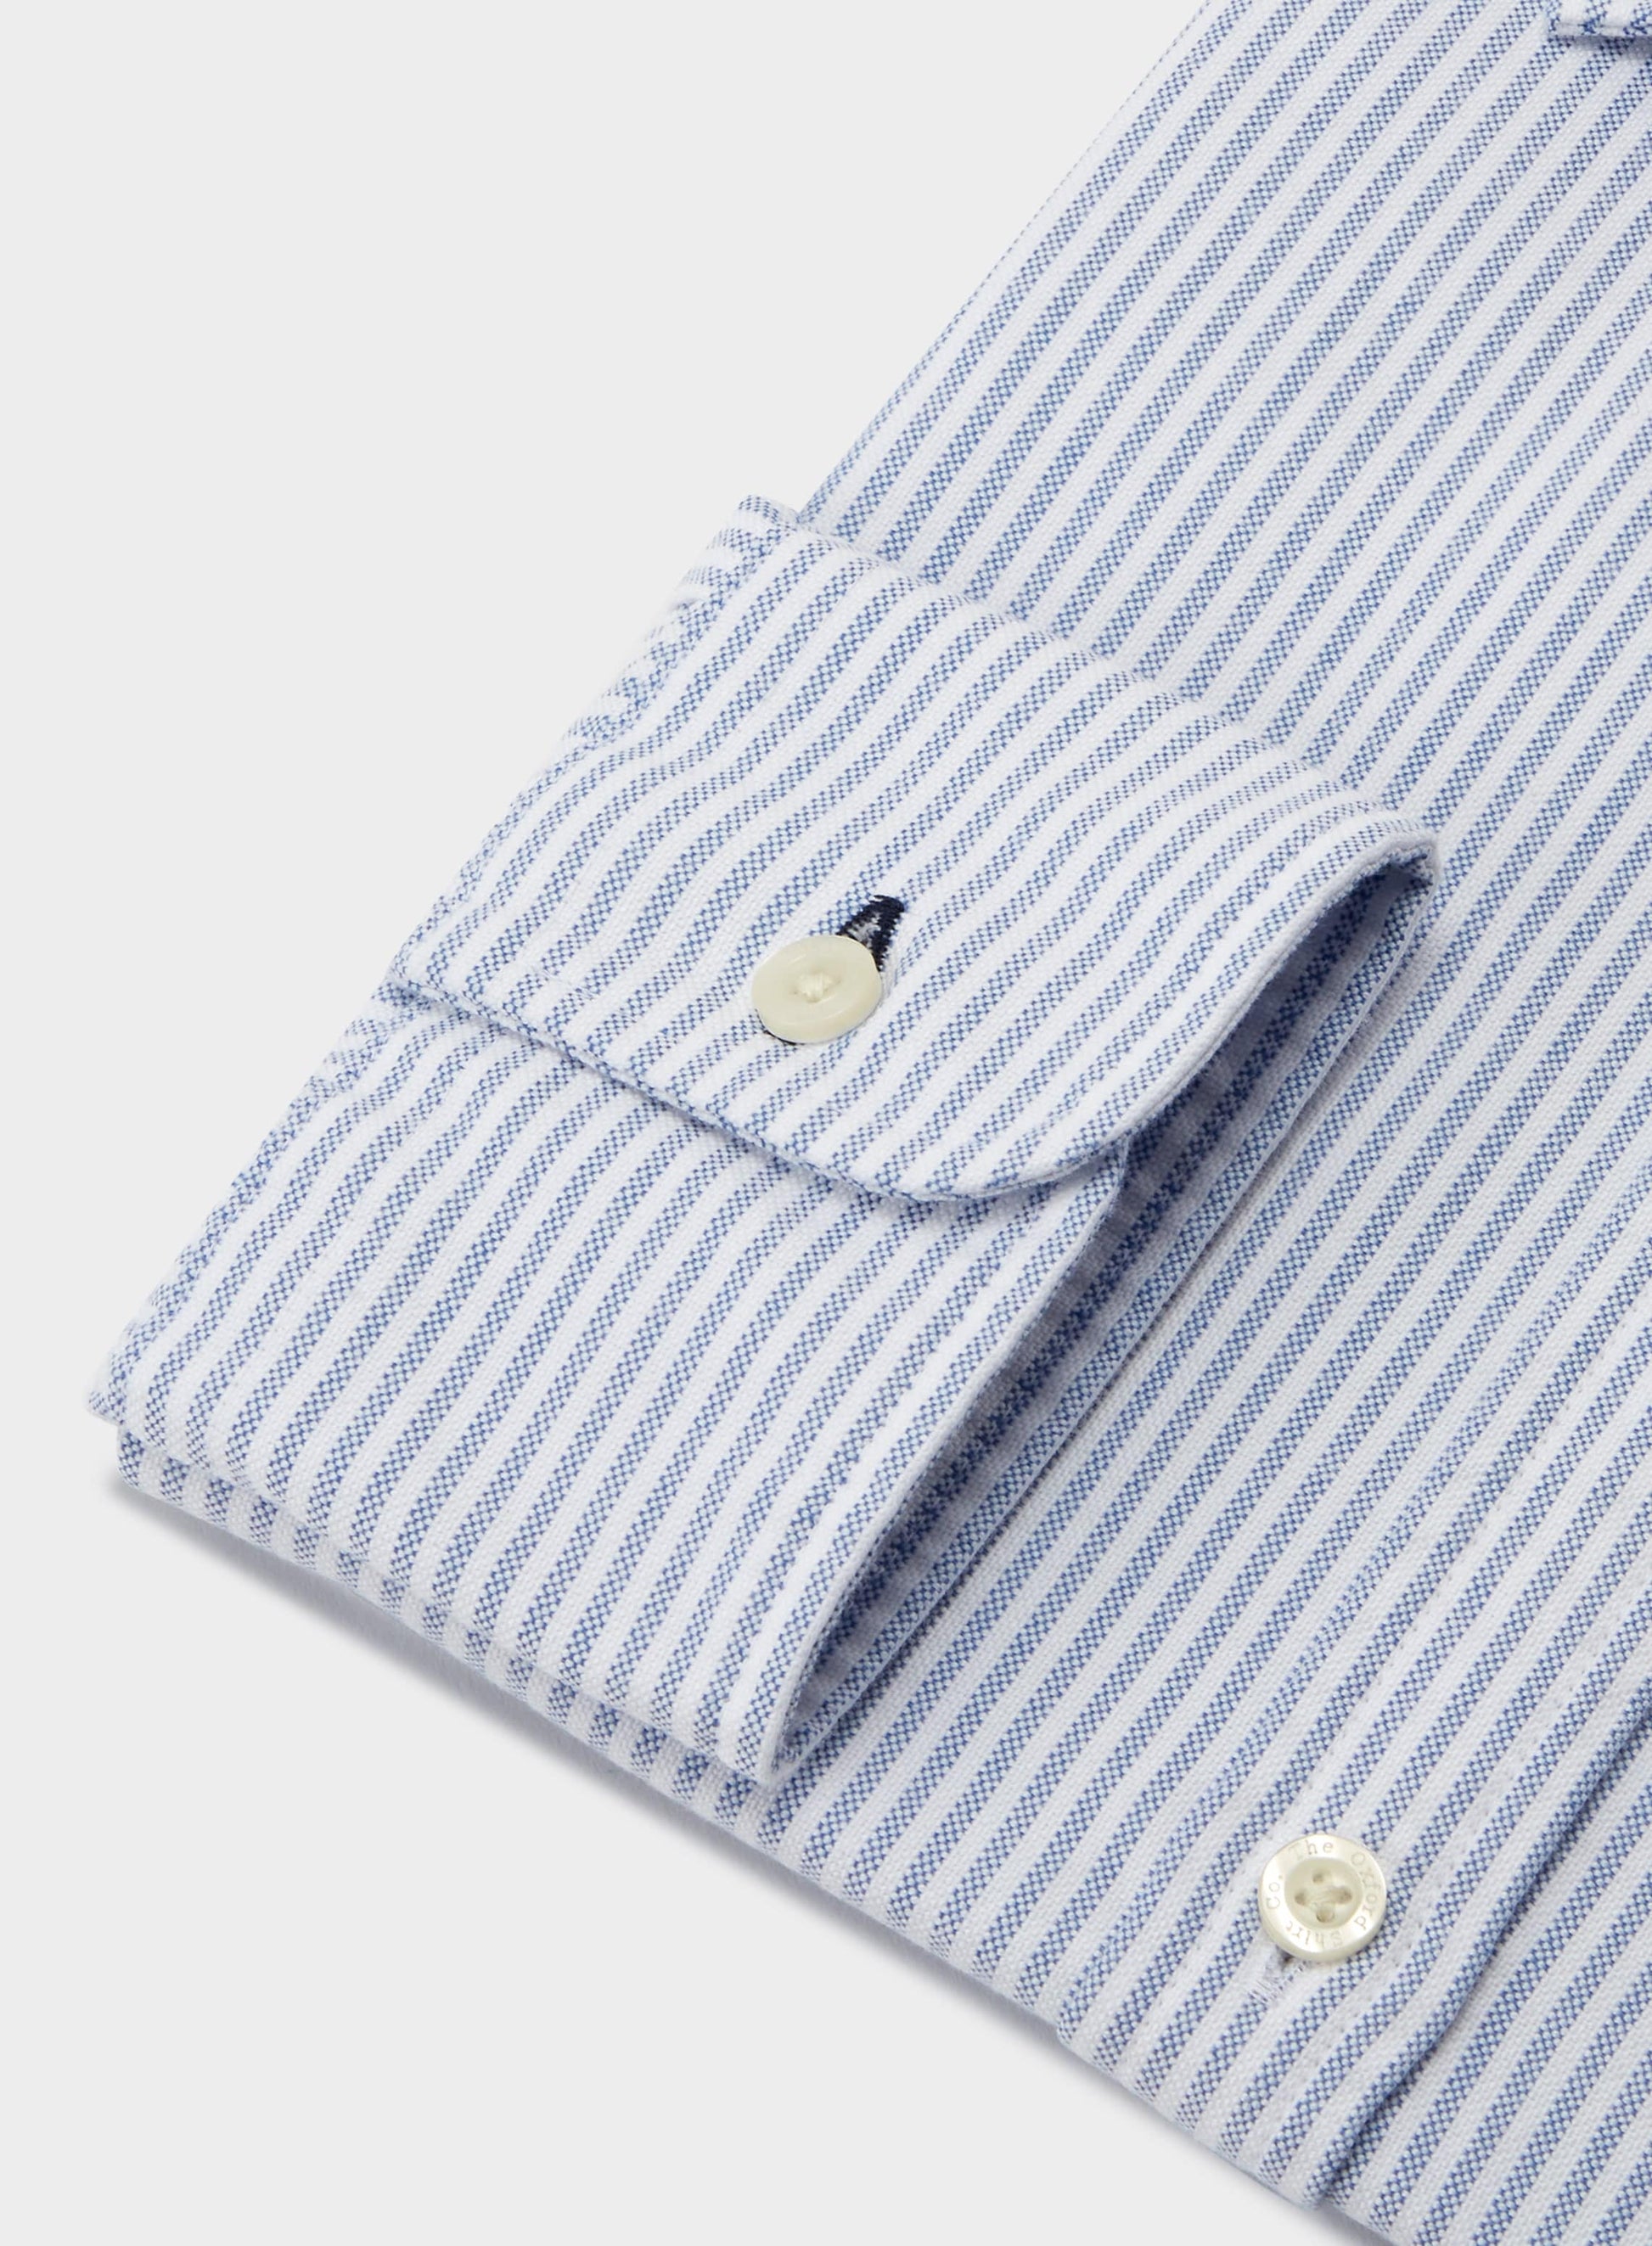 Classic Oxford Shirt - Blue Stripe